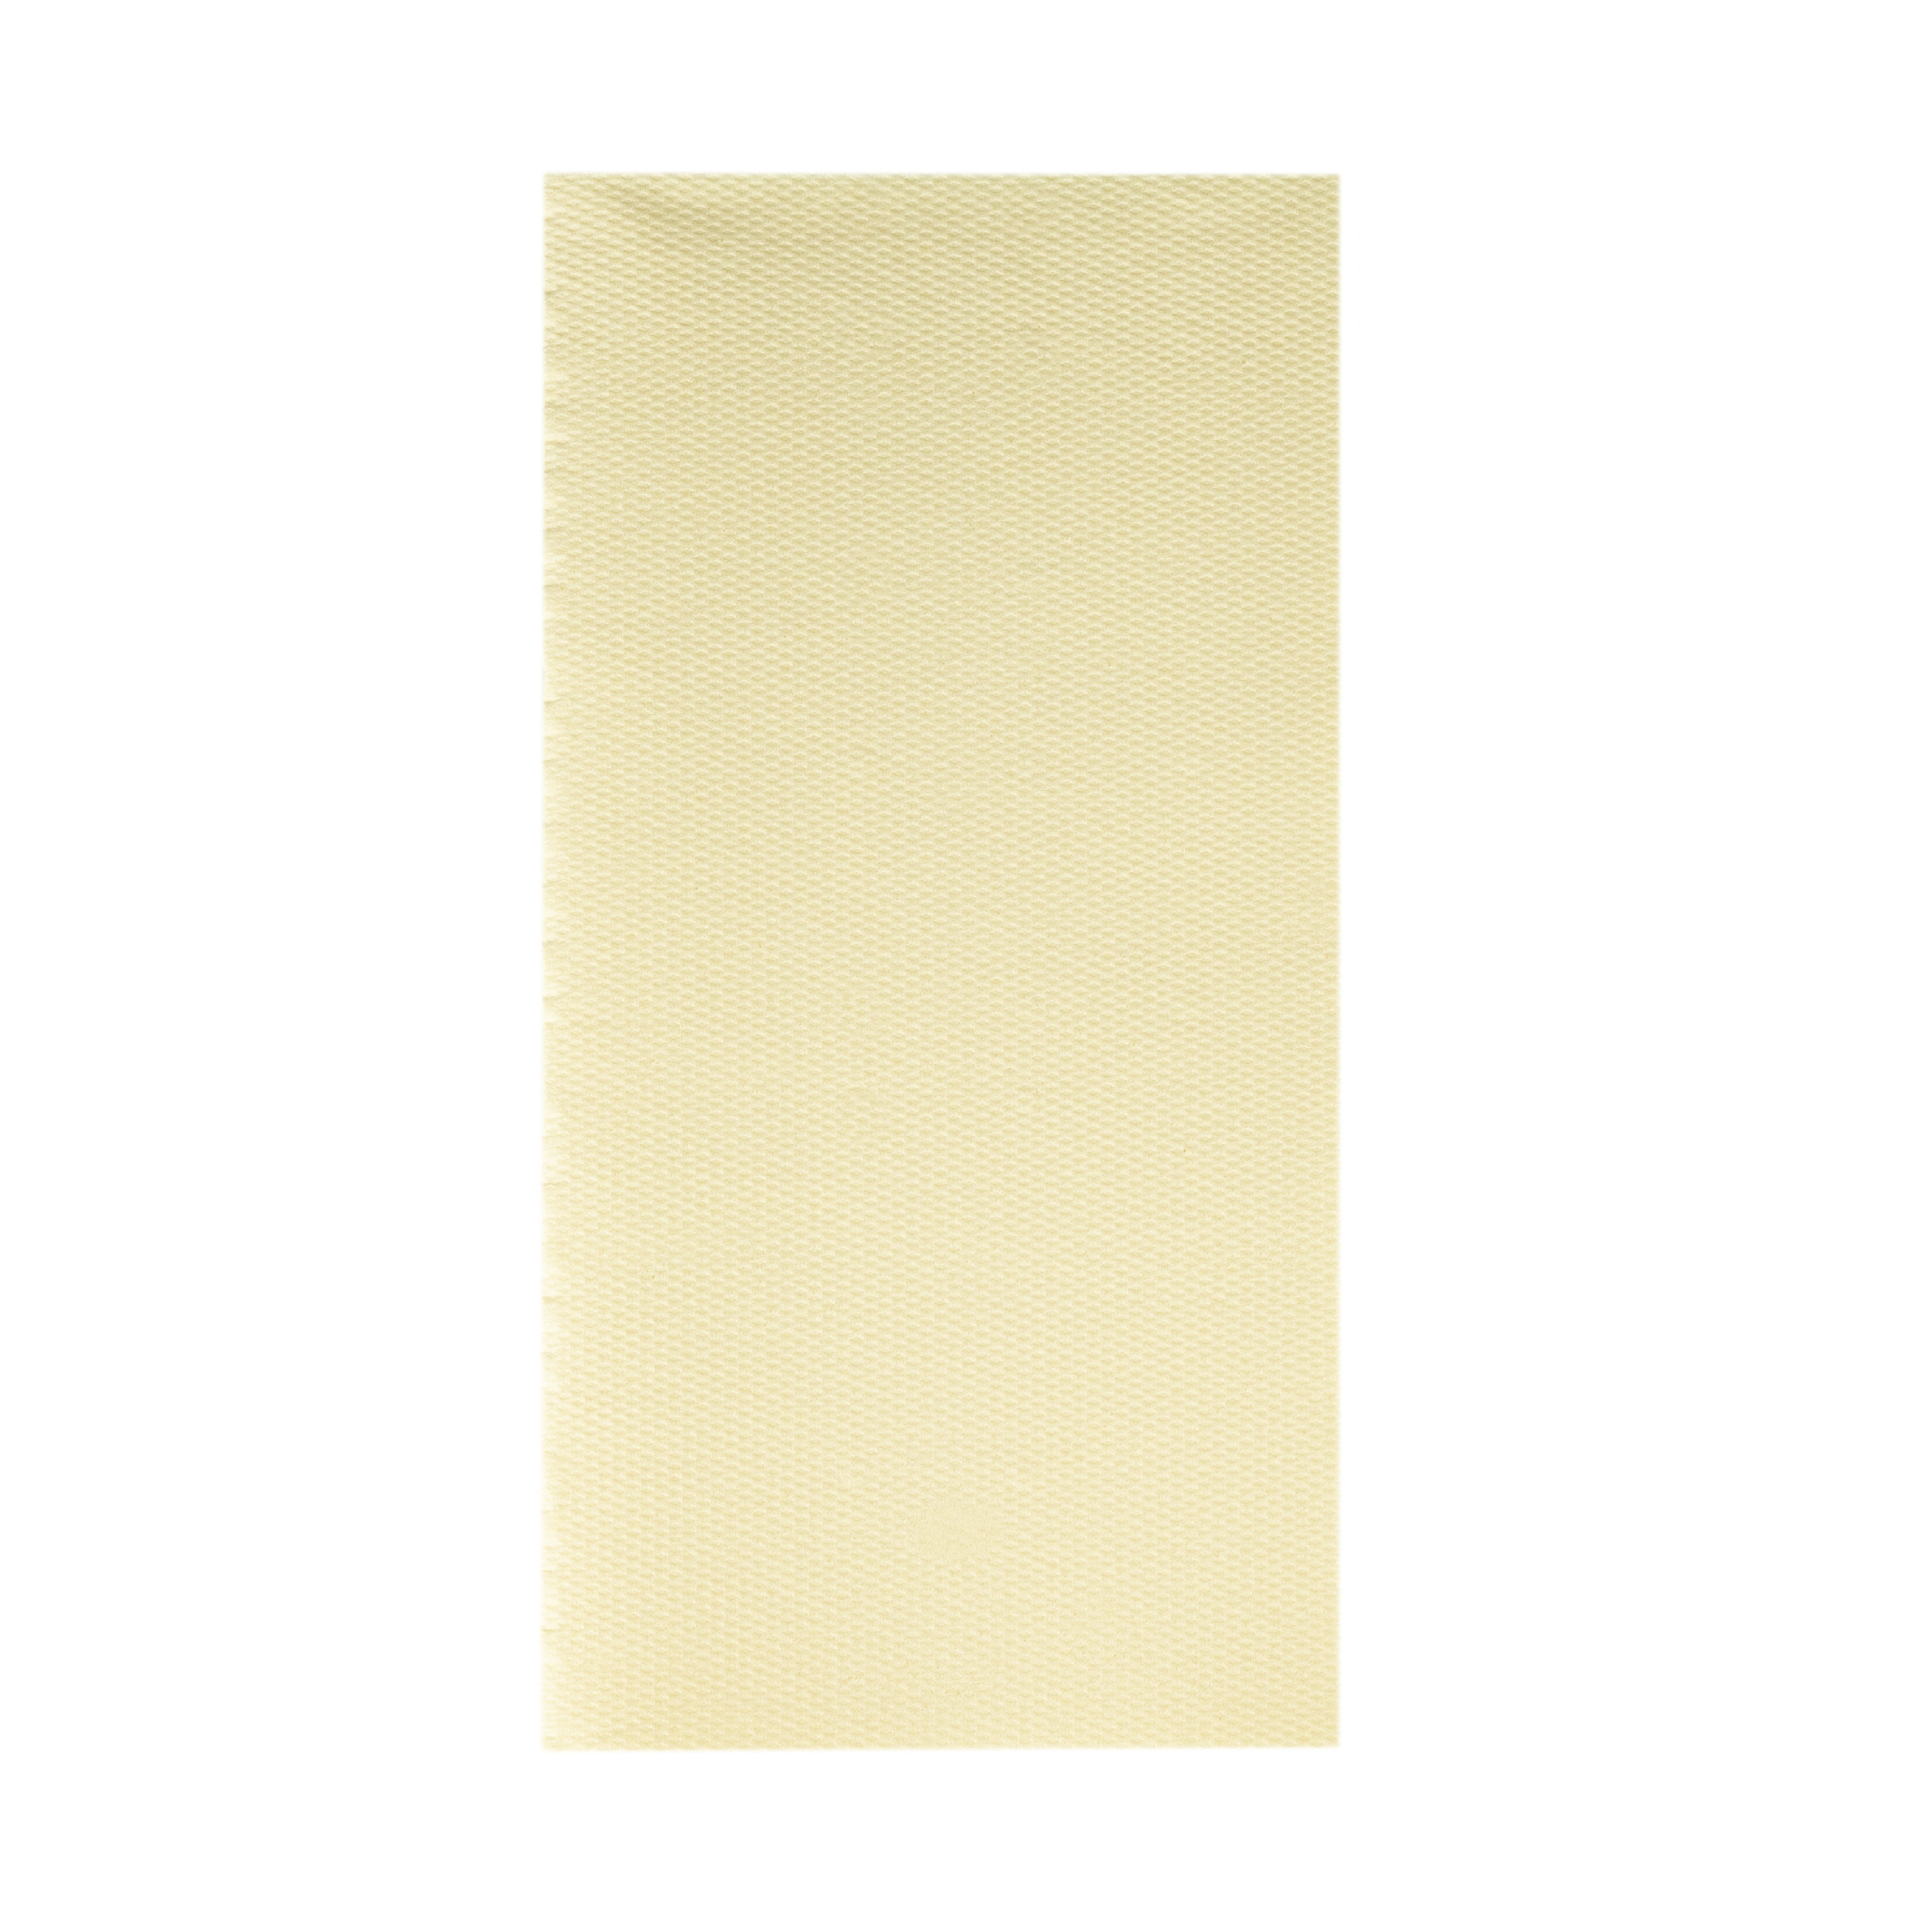 Mank Serviette Softpoint 1/8 Falz, 40 x 40 cm, Basic creme